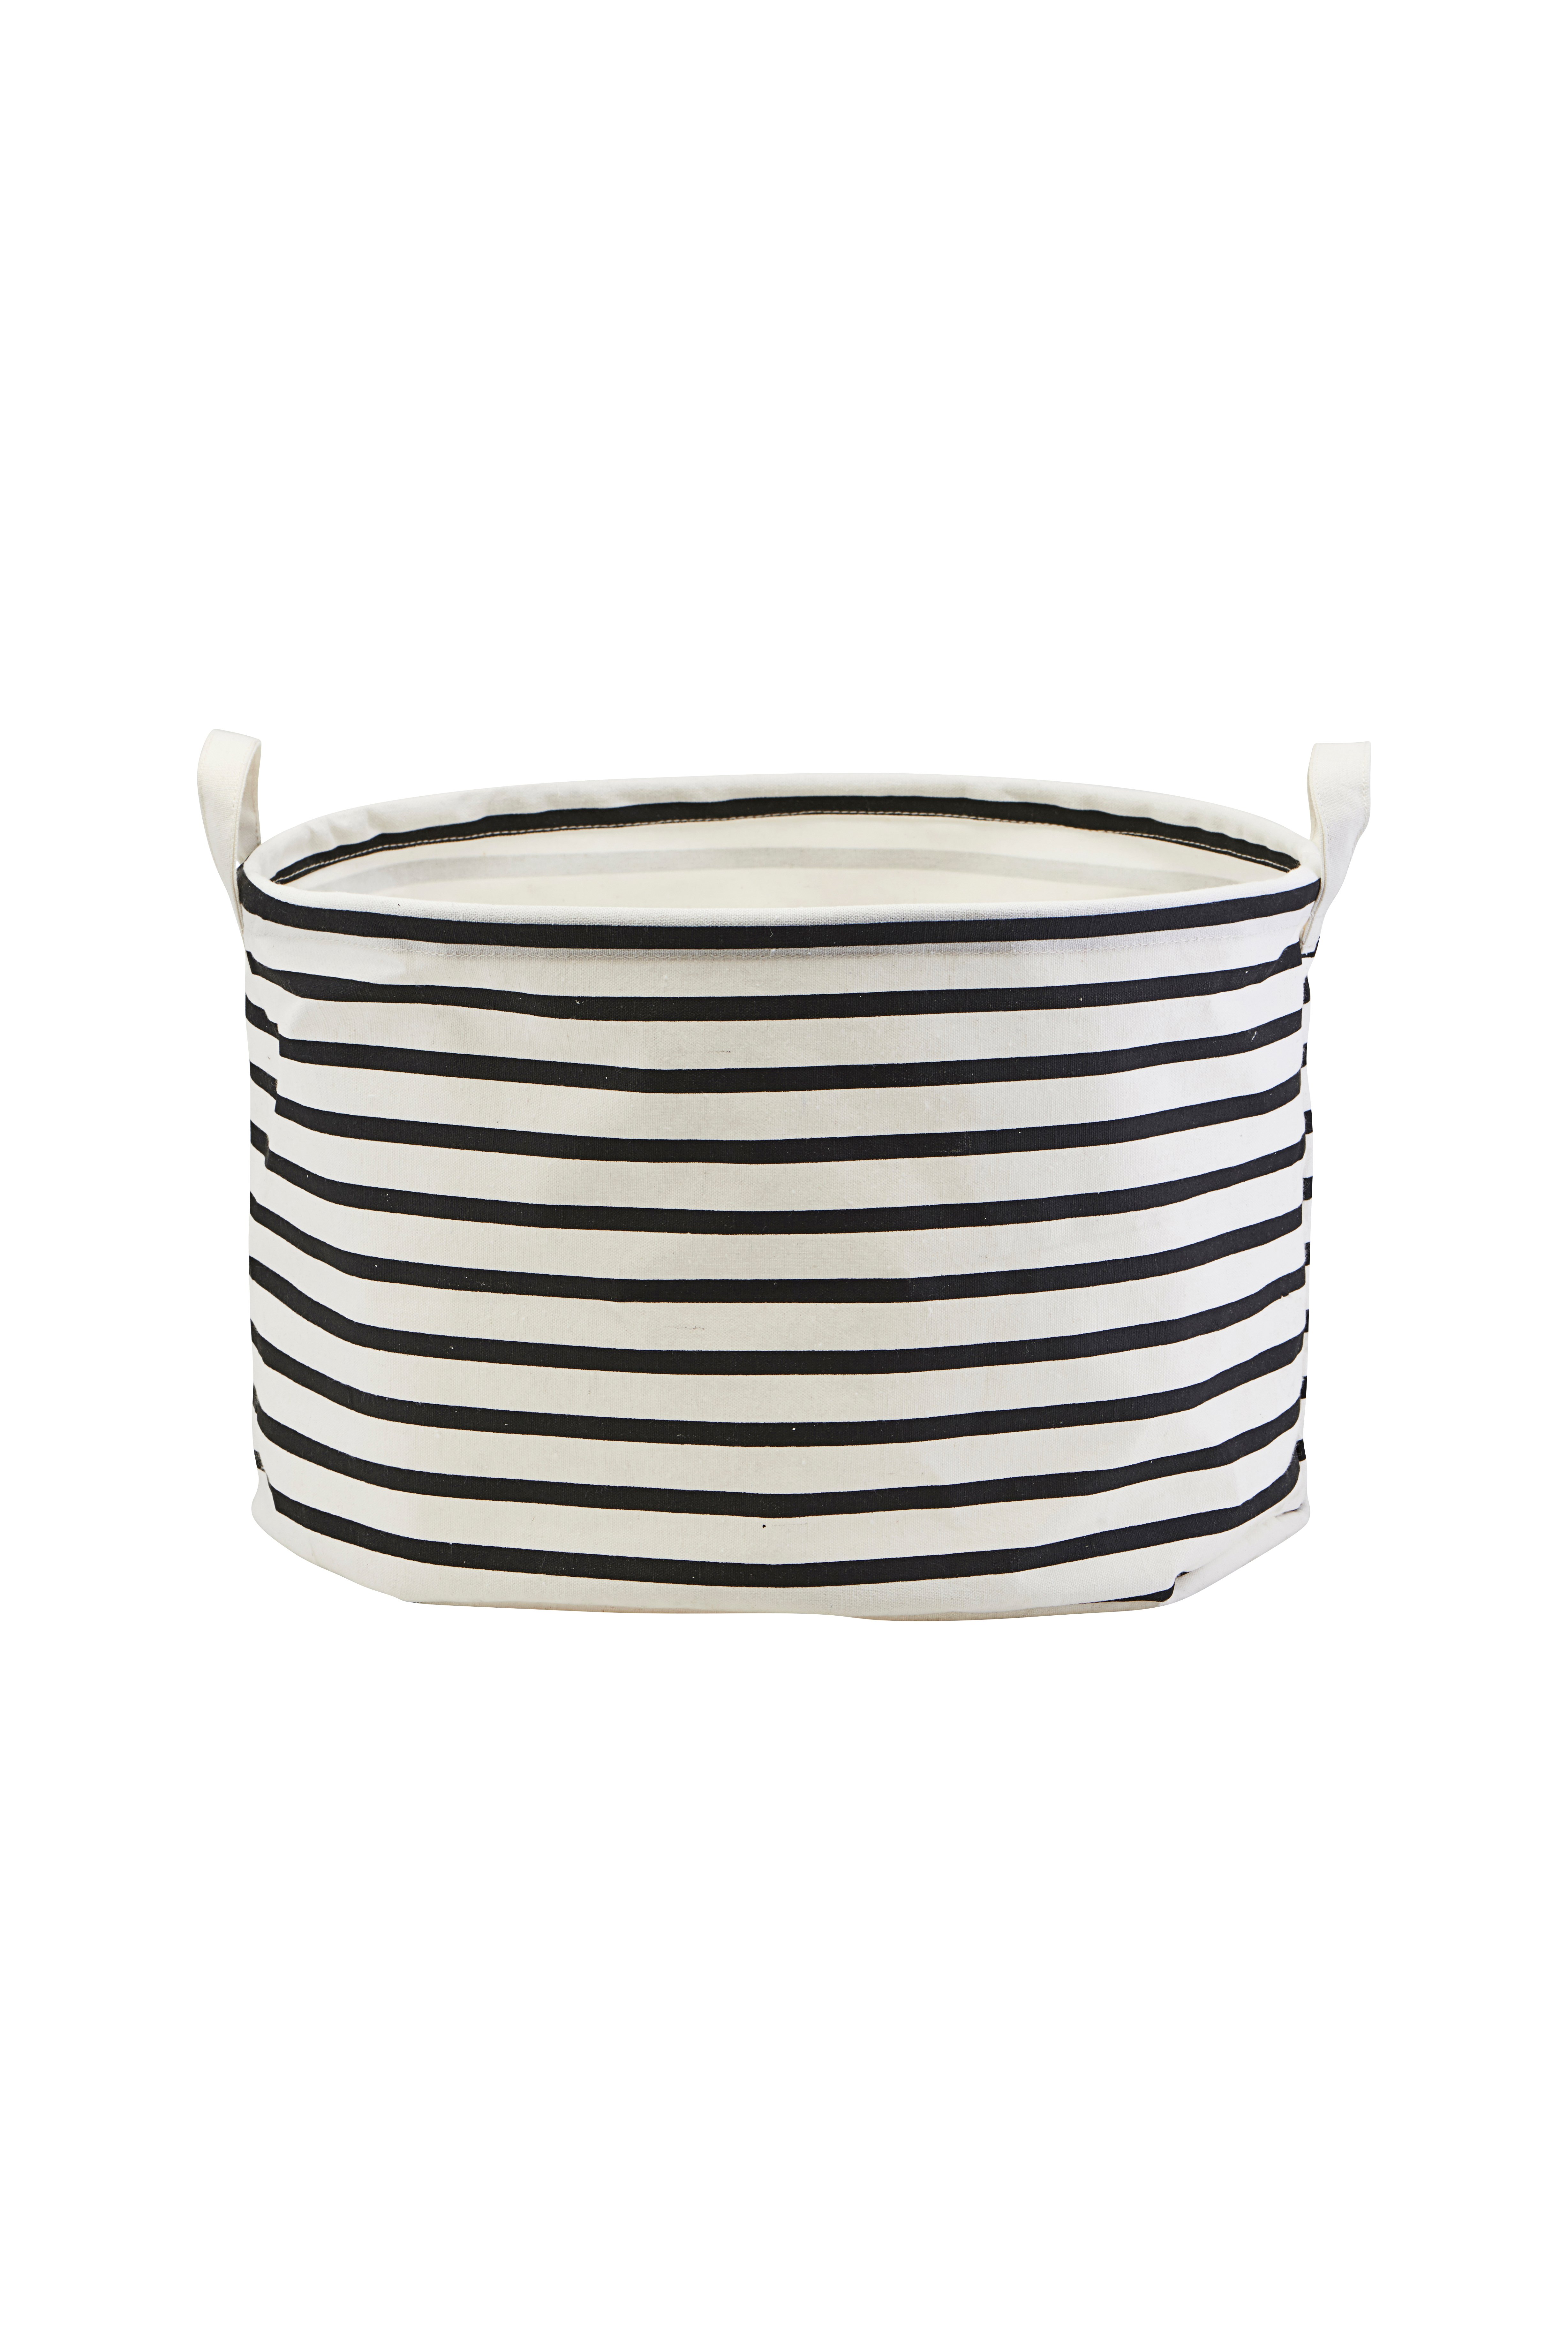 House Doctor - Storage Bag Stripes Small - Black/White (LS0441)